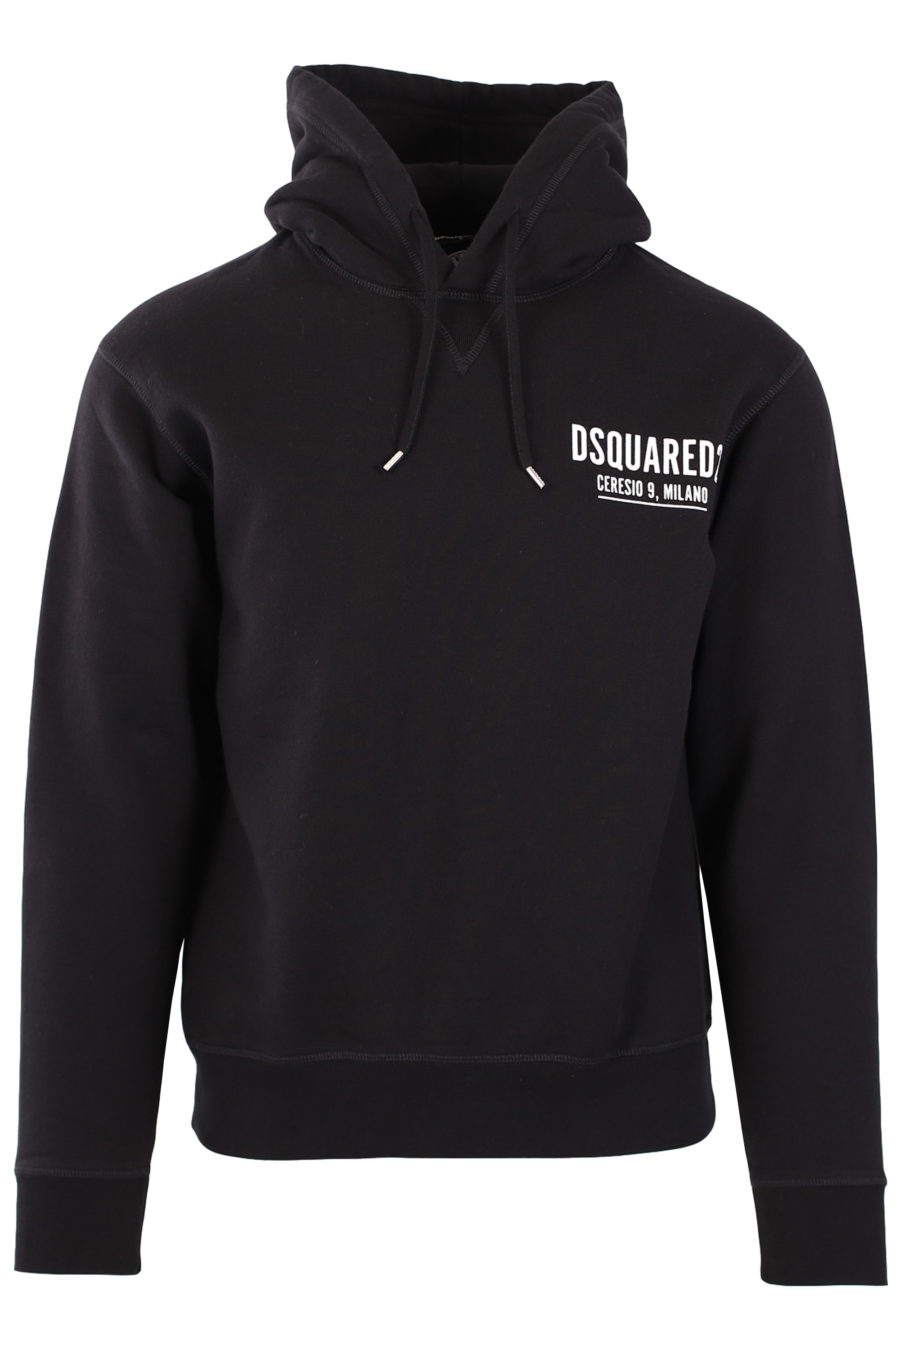 Black hooded sweatshirt with logo "Ceresio 9 Milano" - 396cd04909aae19cb765b3174f3ef00f8fc6b0cc